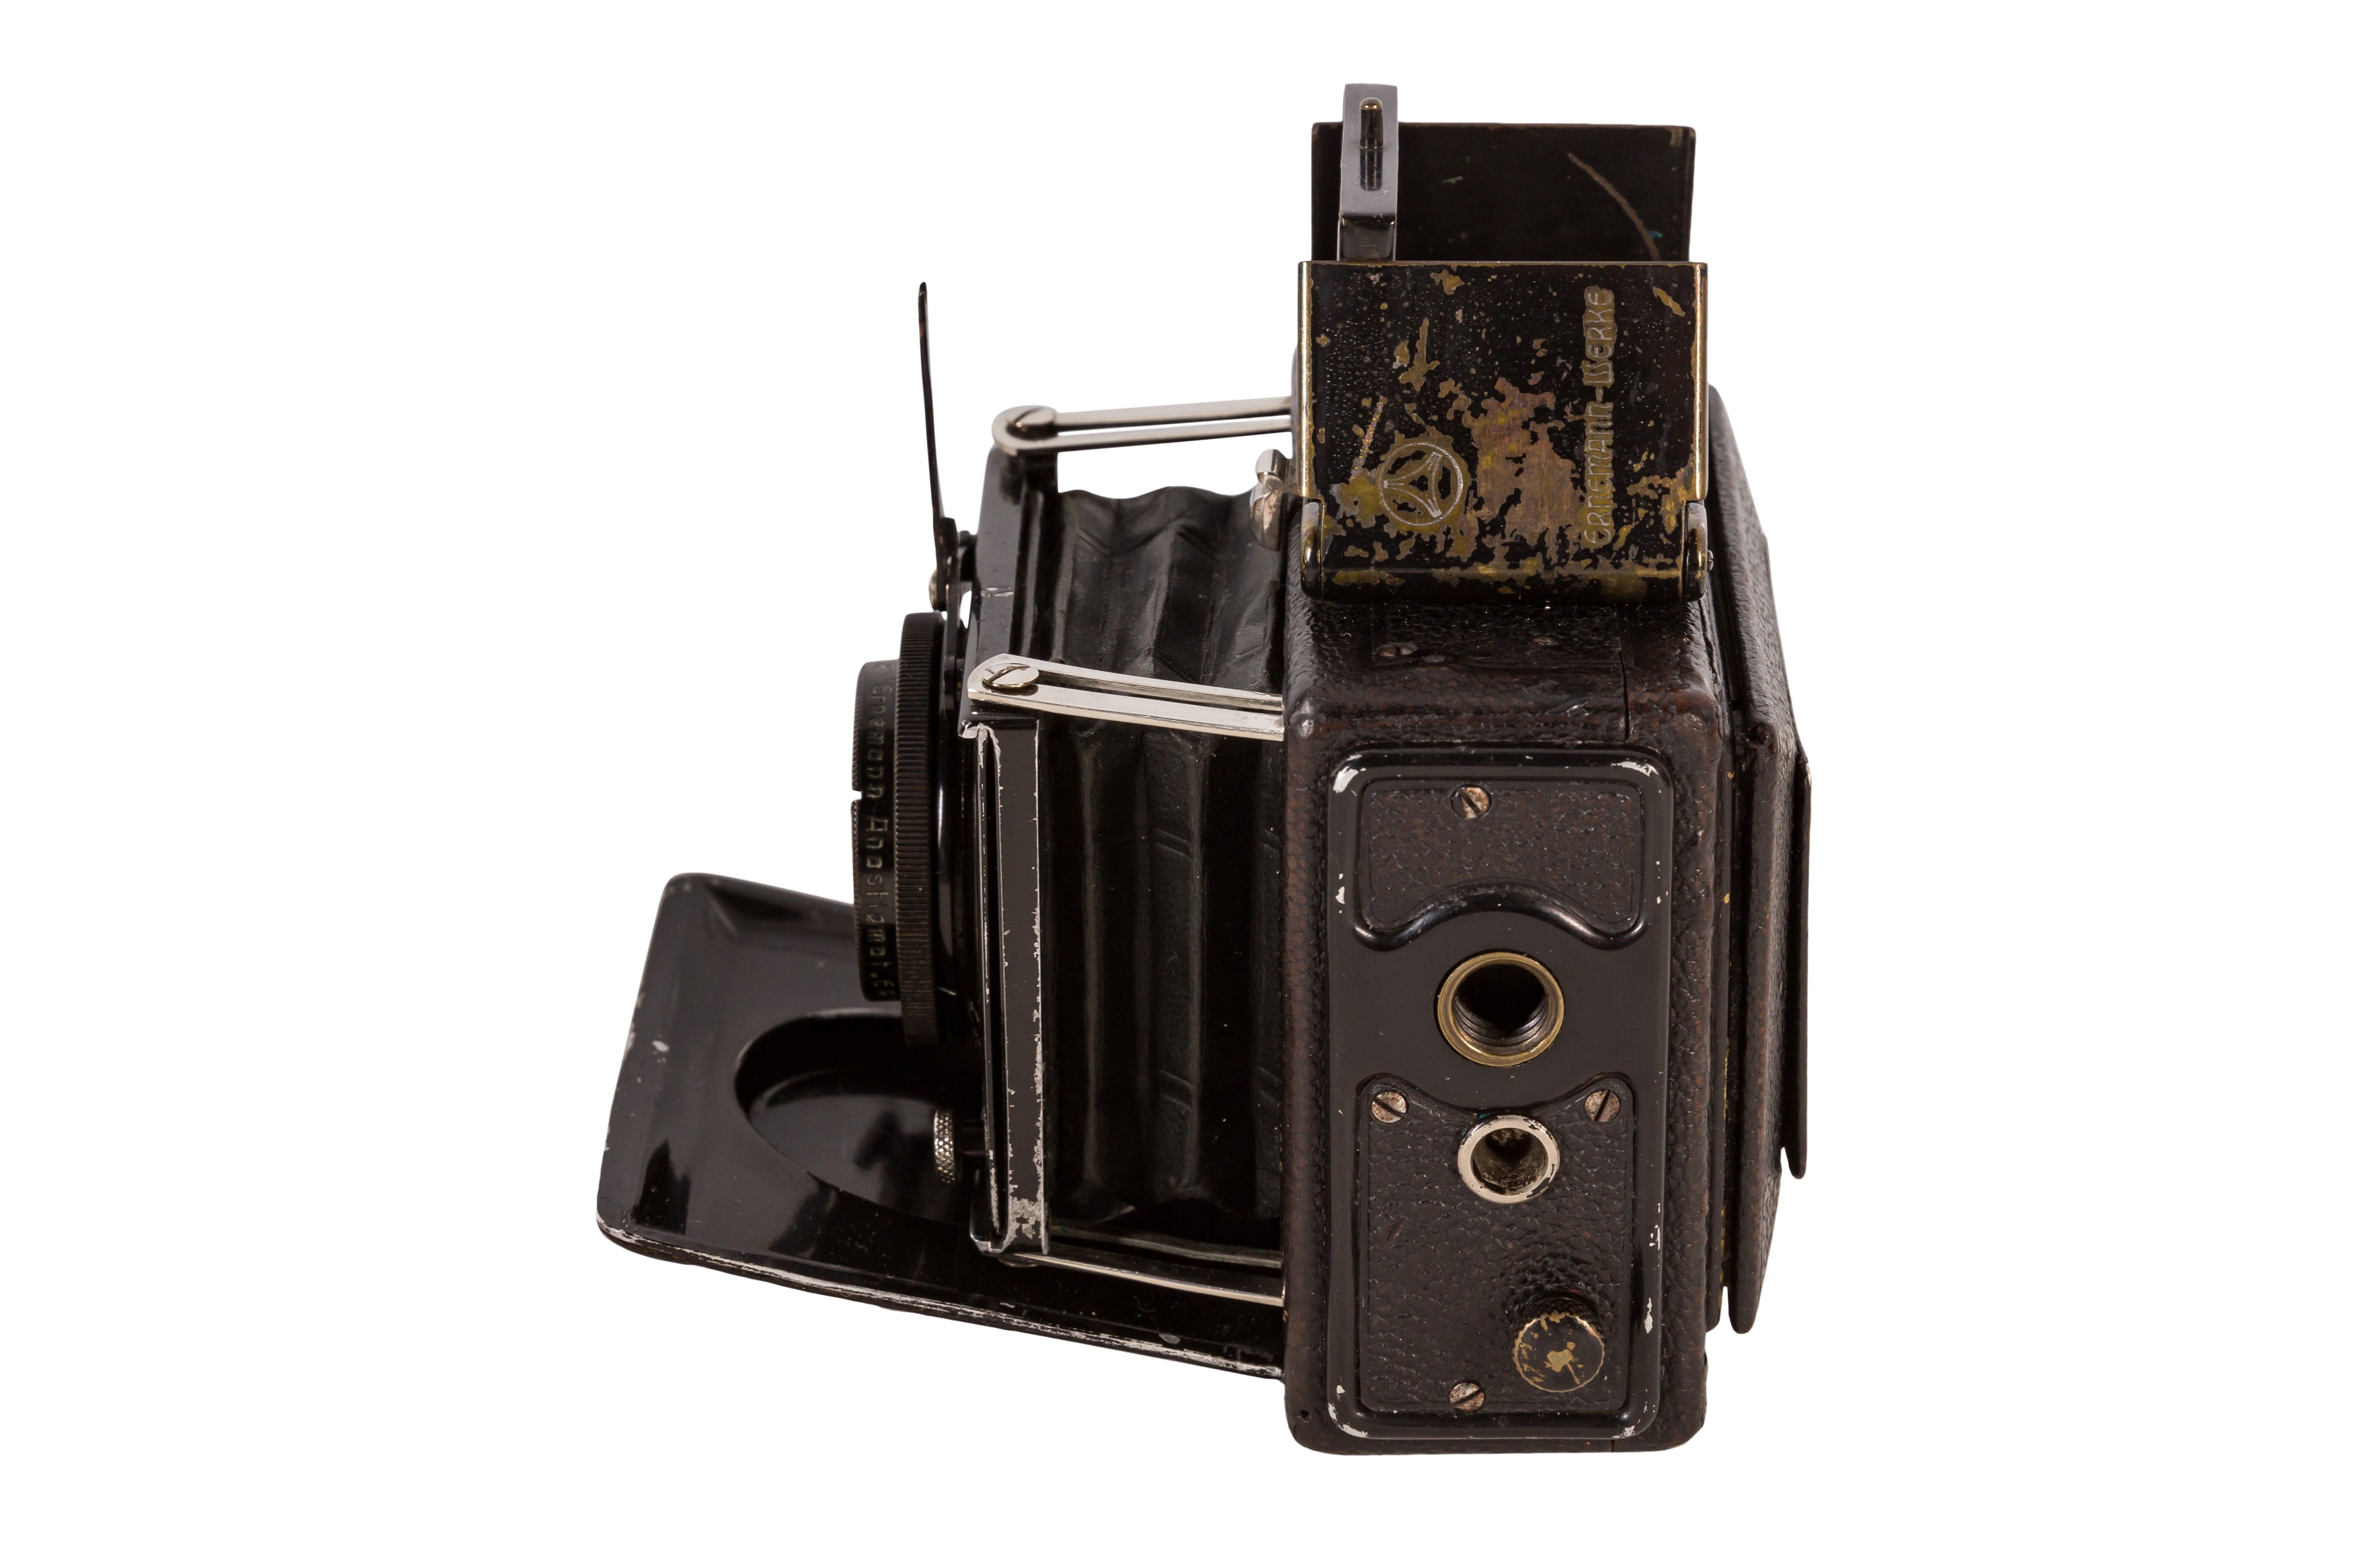 A Ernemann V.P Miniature Klapp Camera - Image 4 of 6